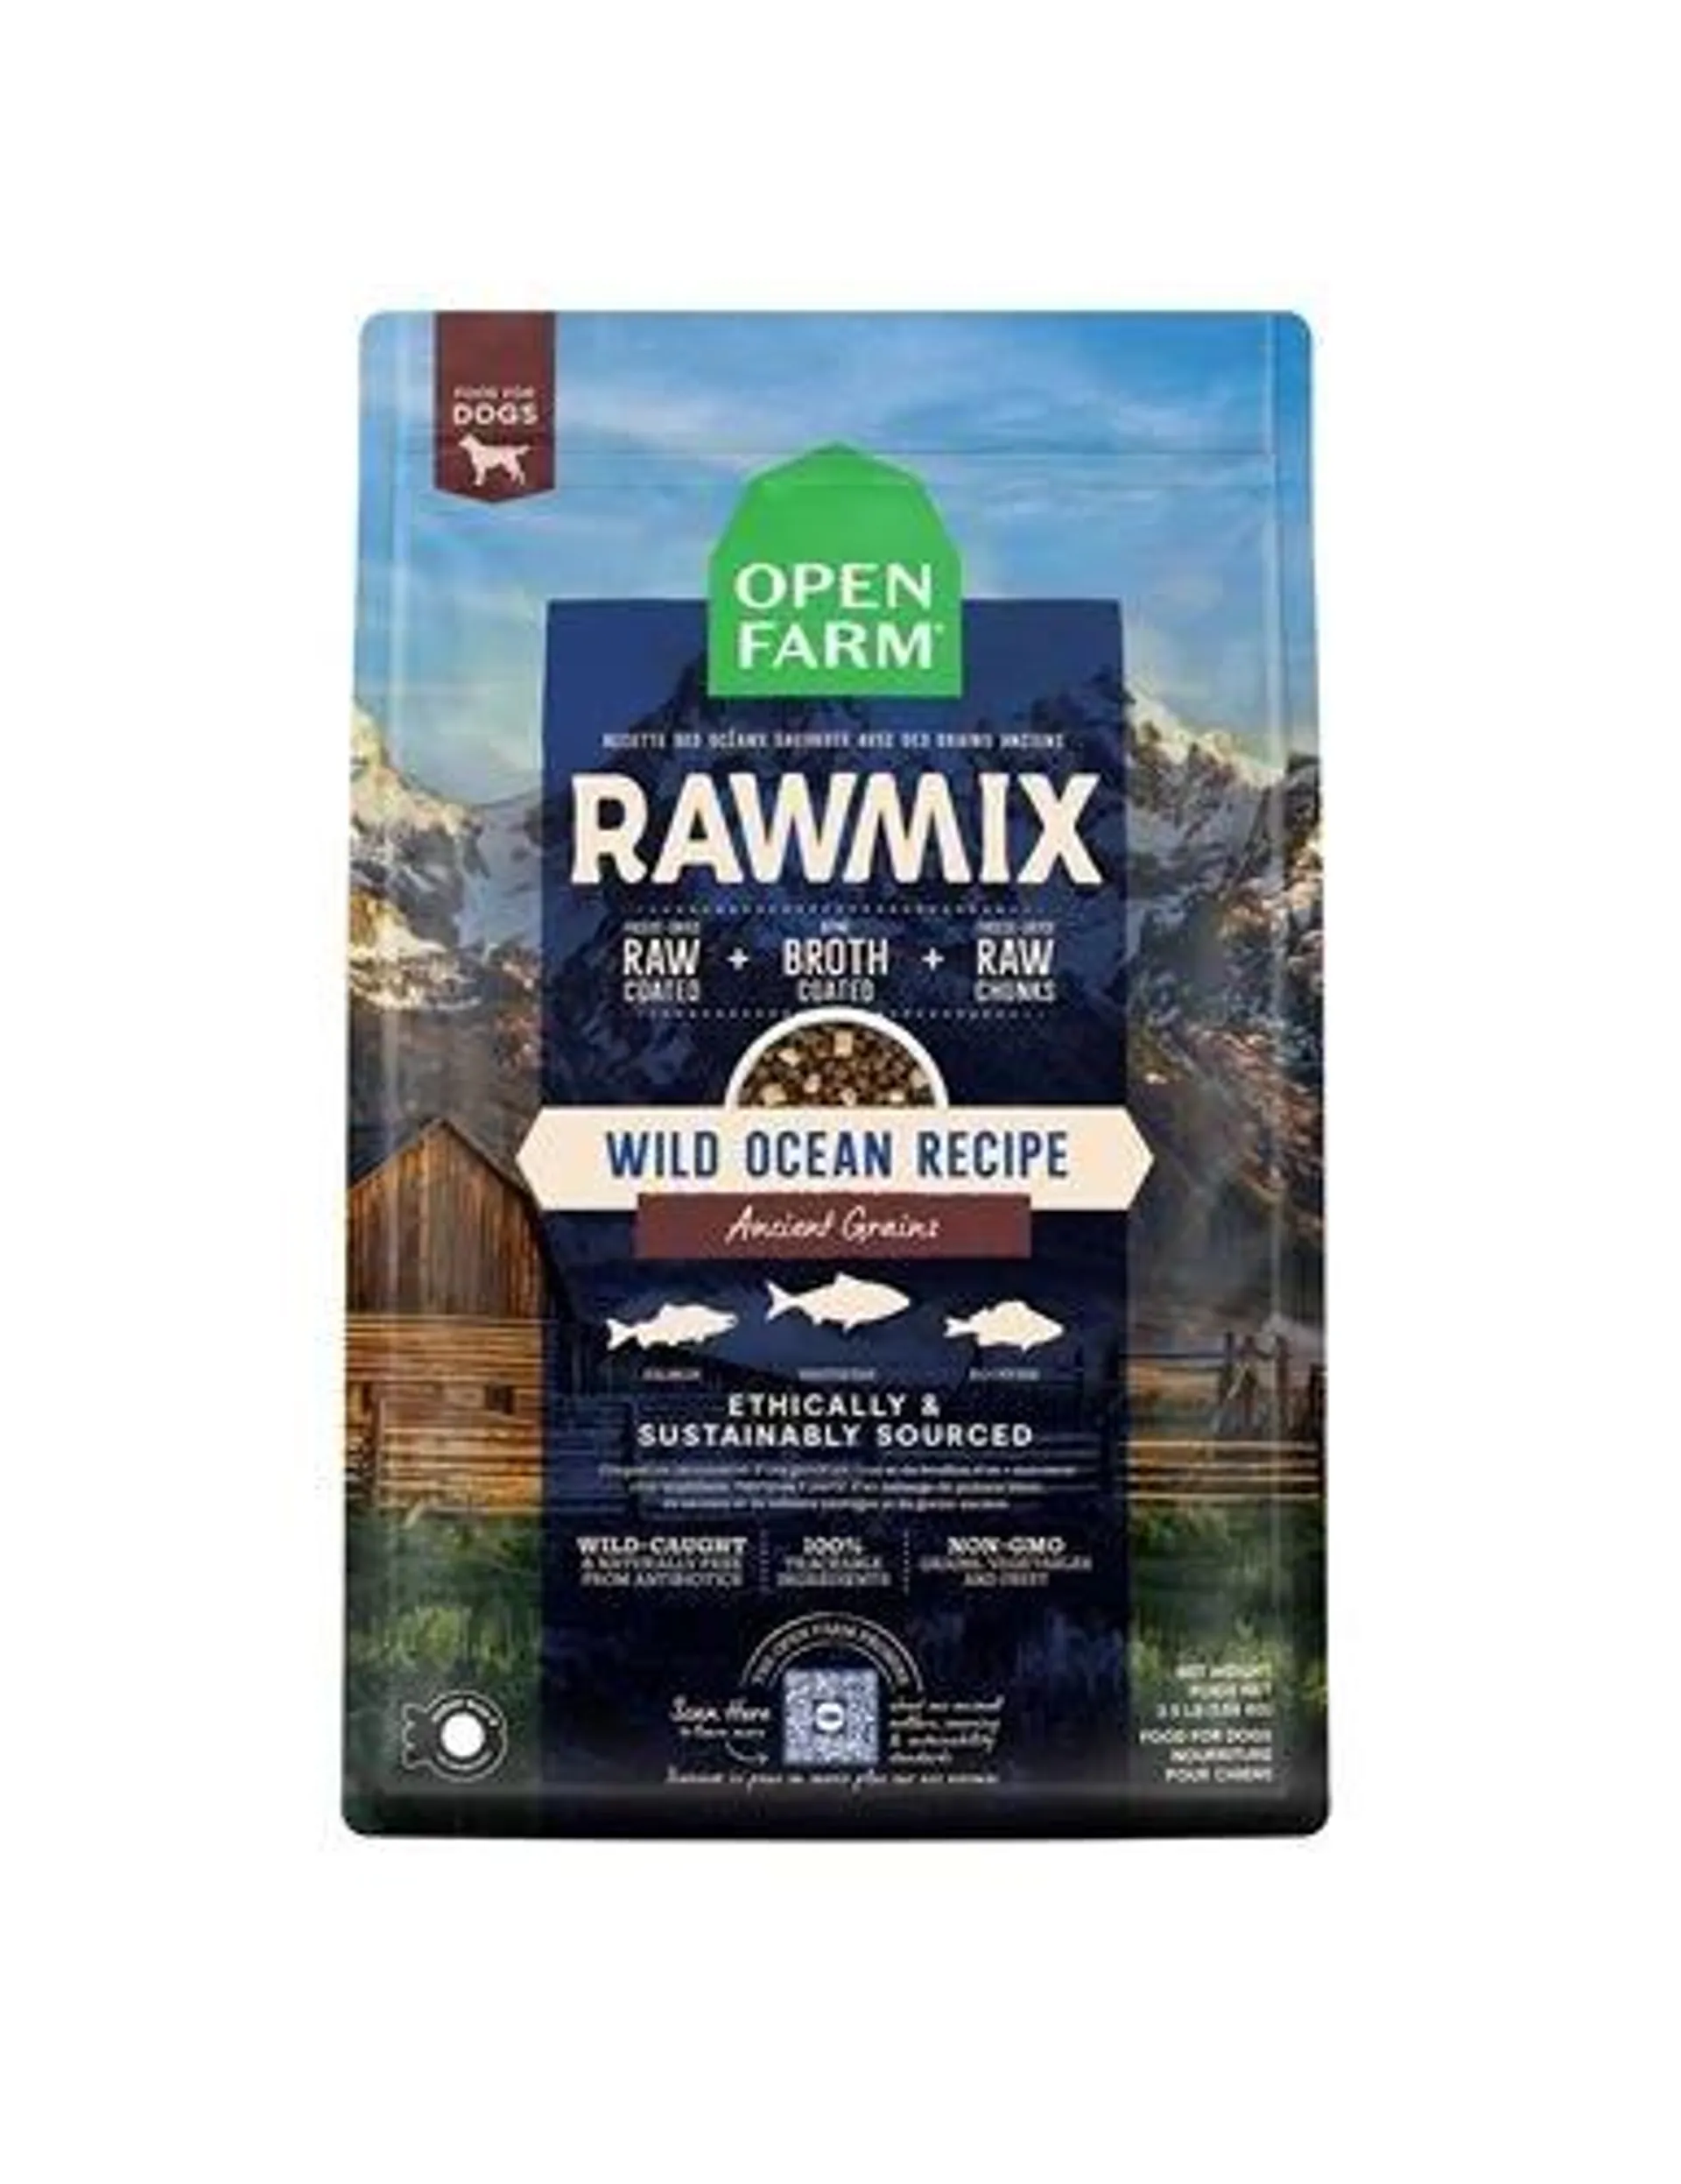 Open Farm RawMix Dog Food, Wild Ocean Recipe Ancient Grains, 20 Pounds